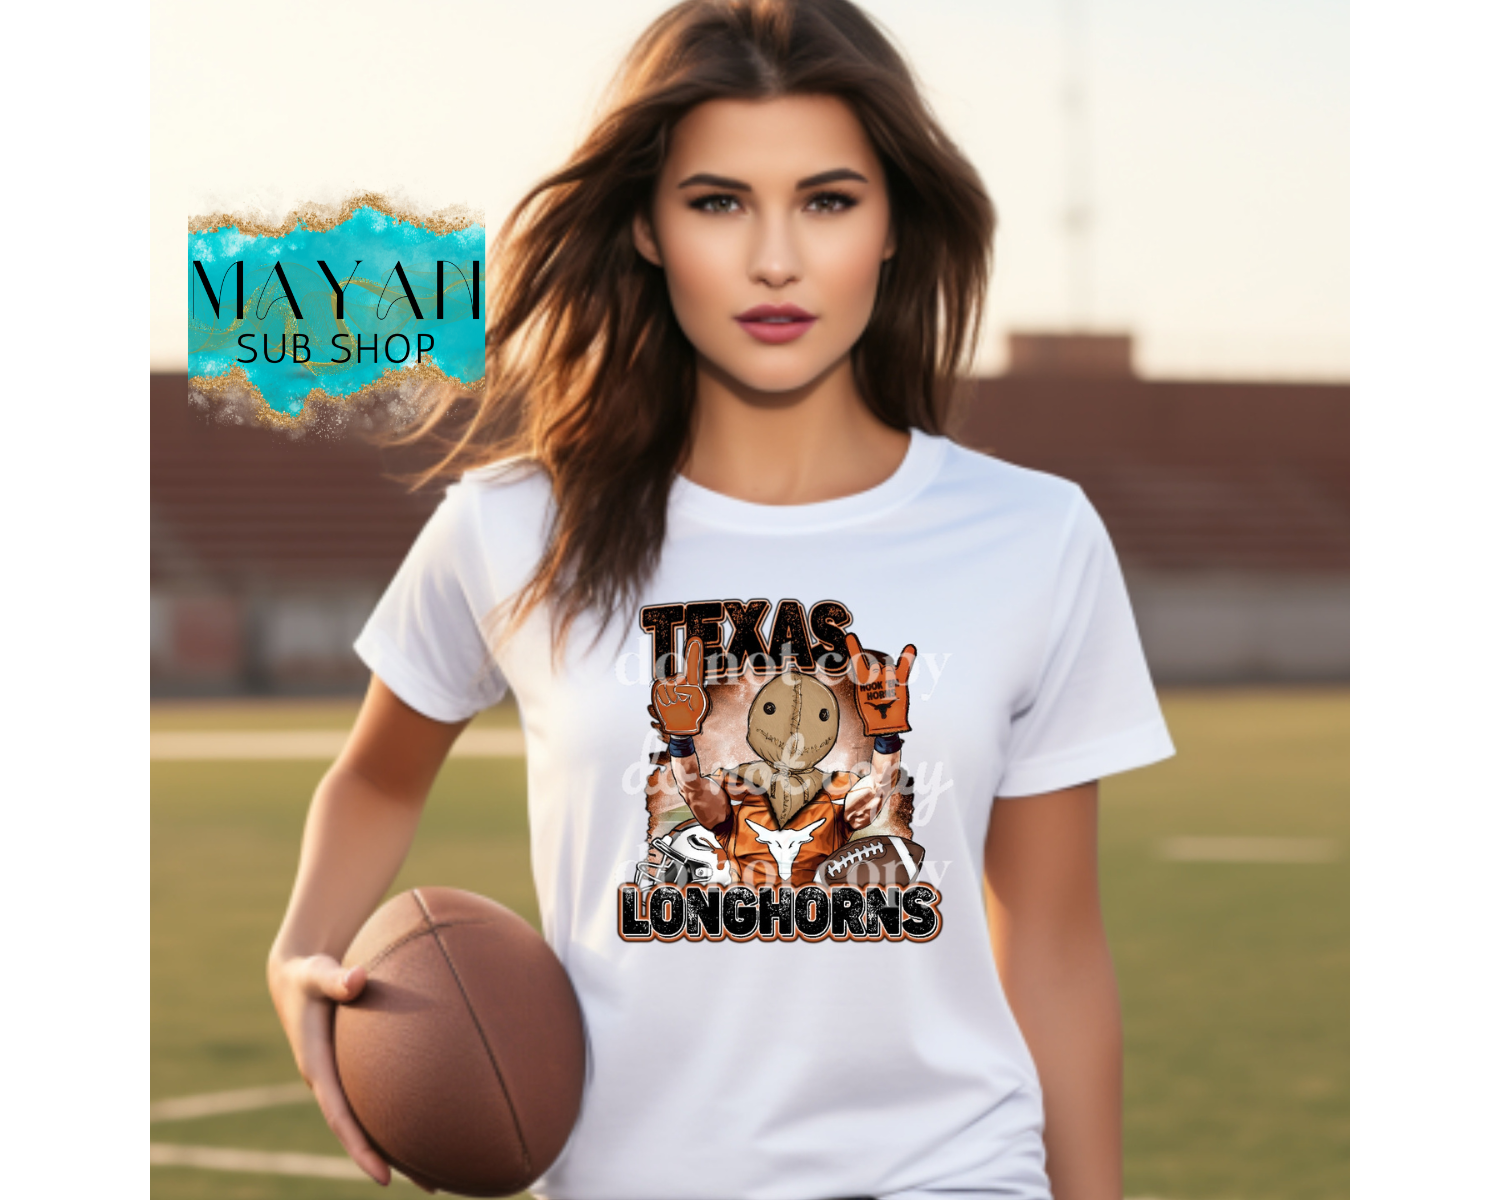 Football Texas shirt. -Mayan Sub Shop